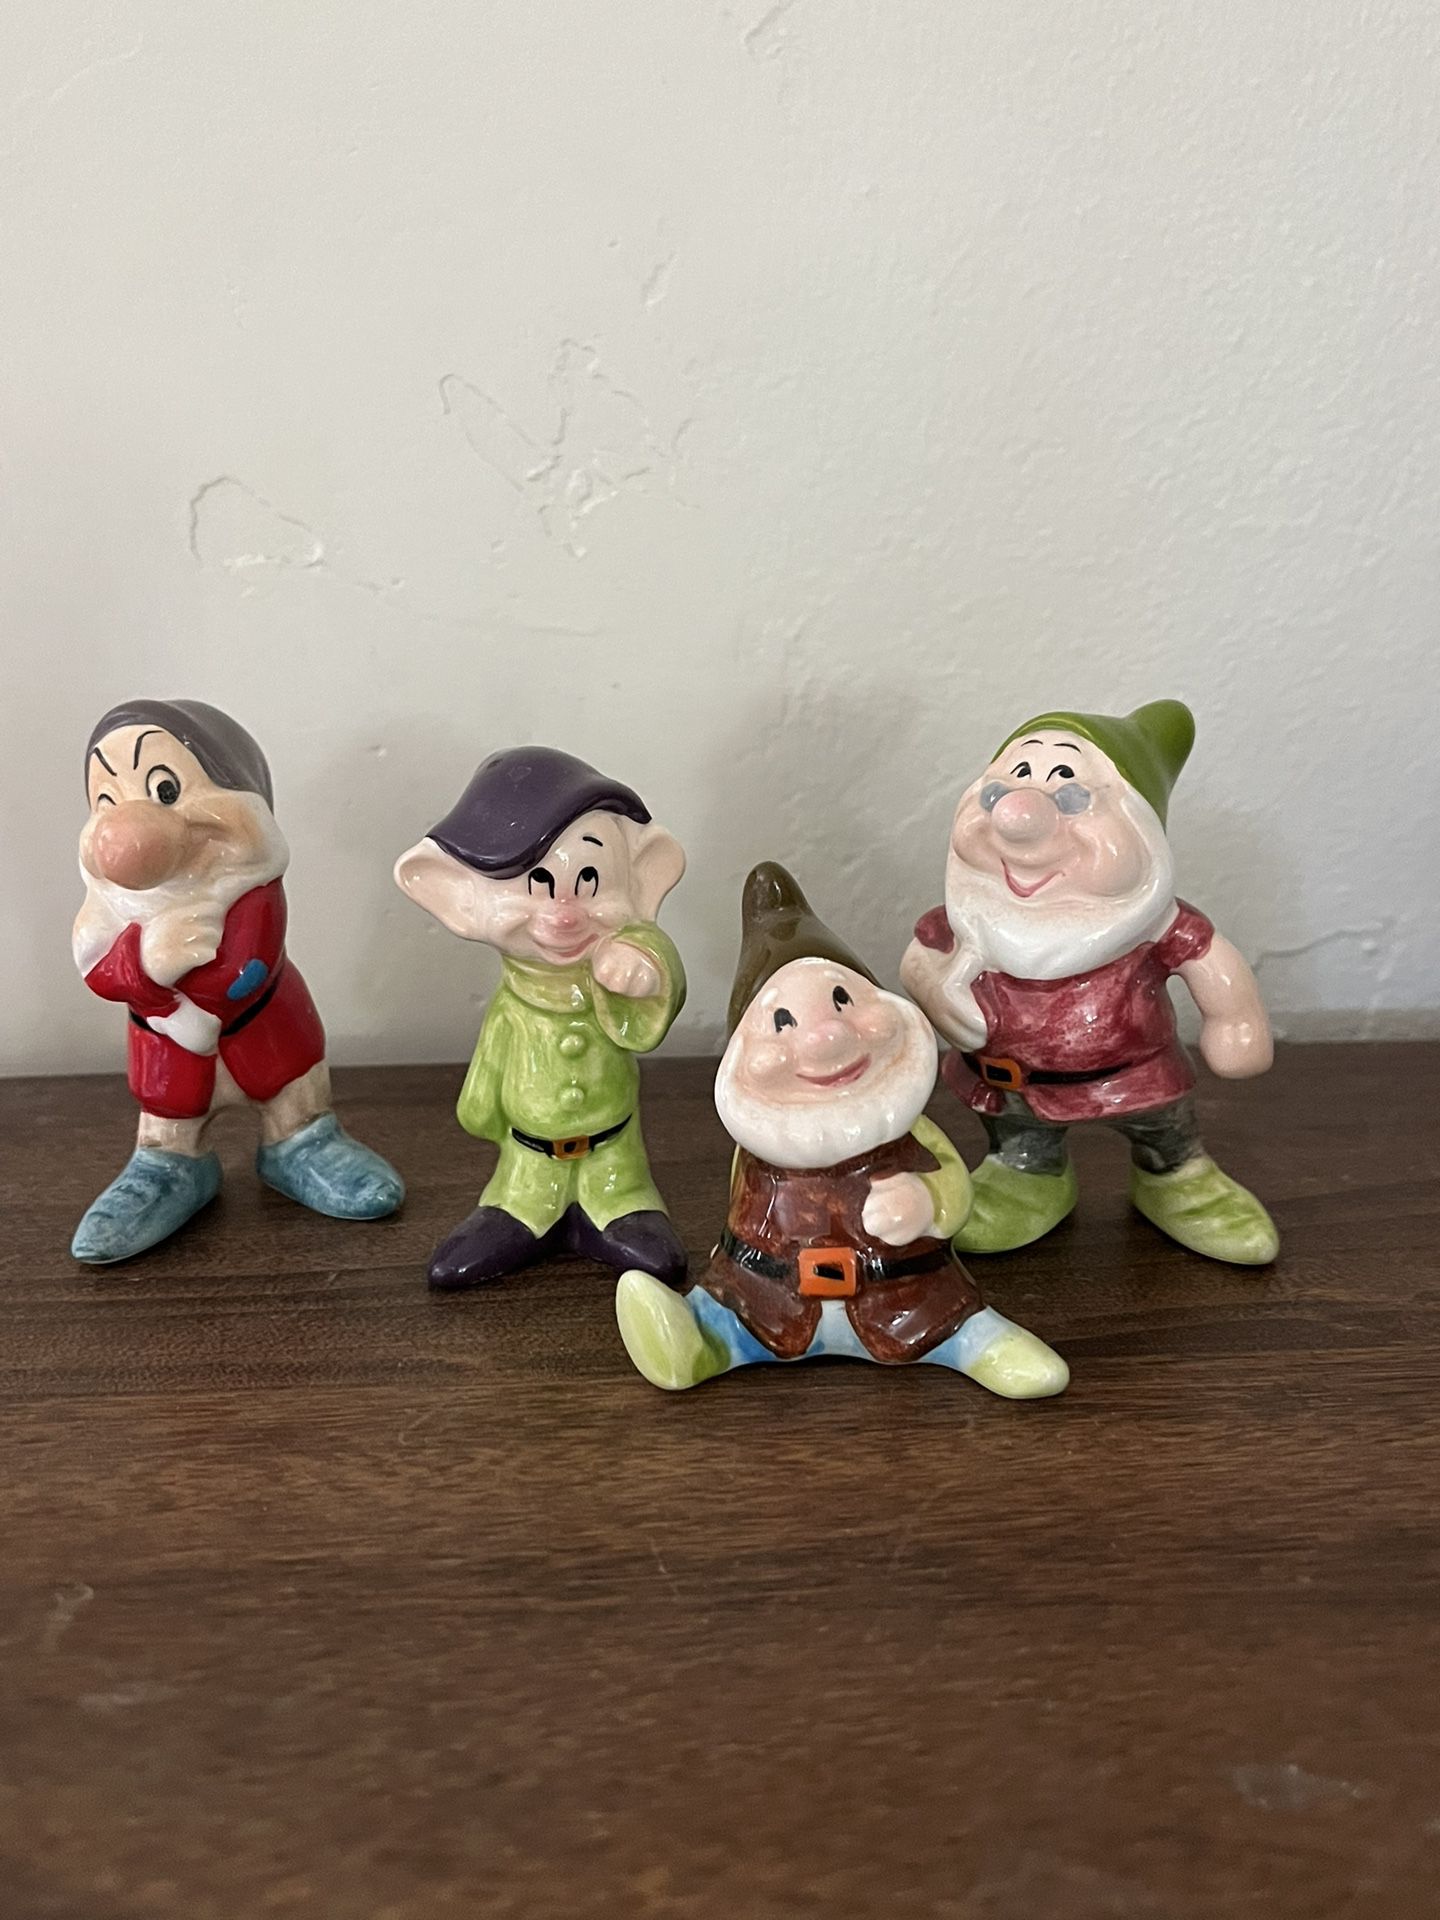 4 Vintage Disney Snow White and Seven Dwarves Ceramic Figurines (Made in Japan)